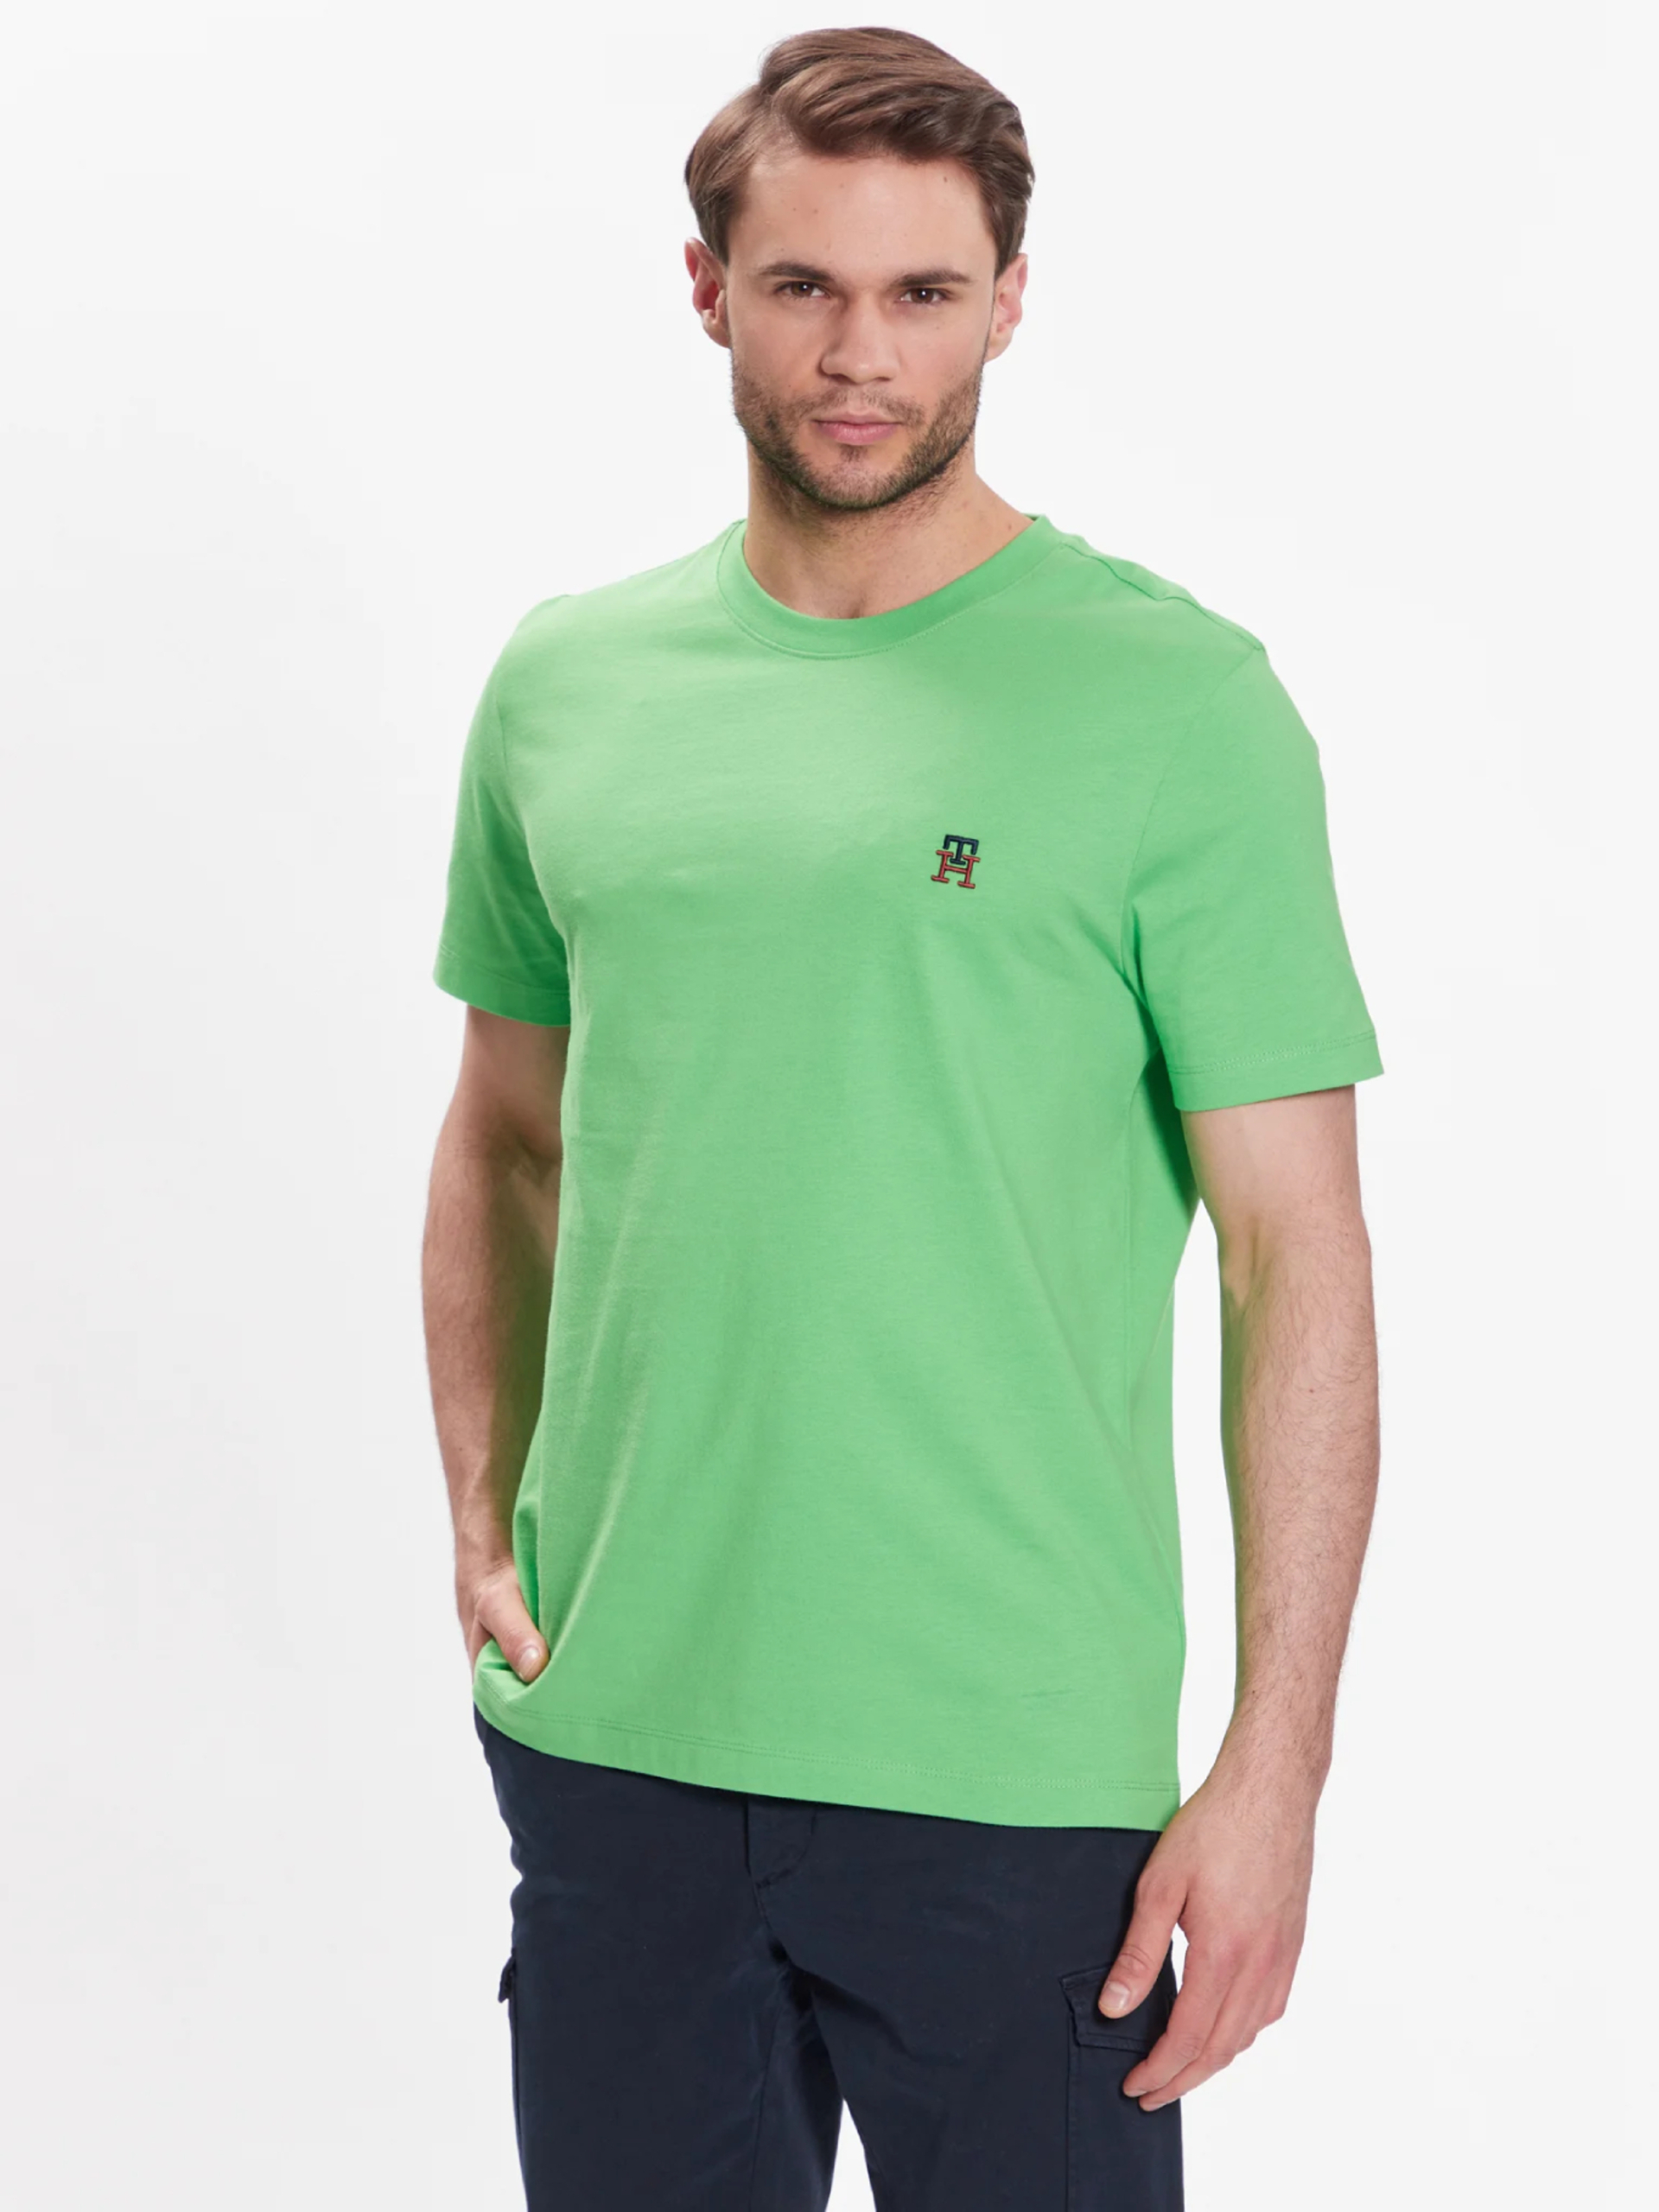 Tommy Hilfiger pánské zelené tričko - XL (LWY)